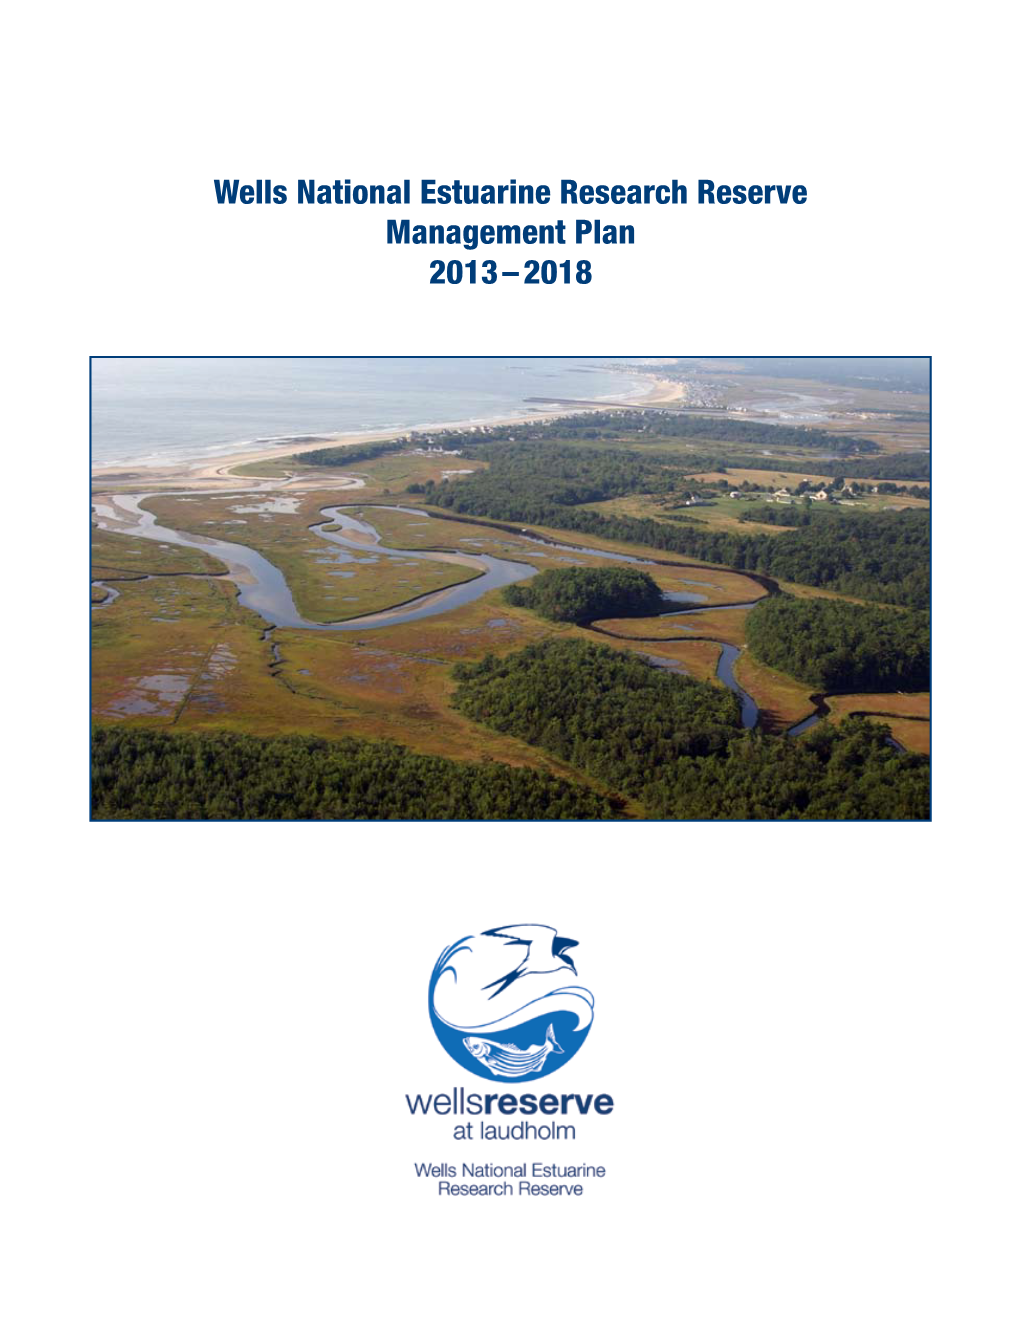 Wells National Estuarine Research Reserve Management Plan 2013 – 2018 Acknowledgments